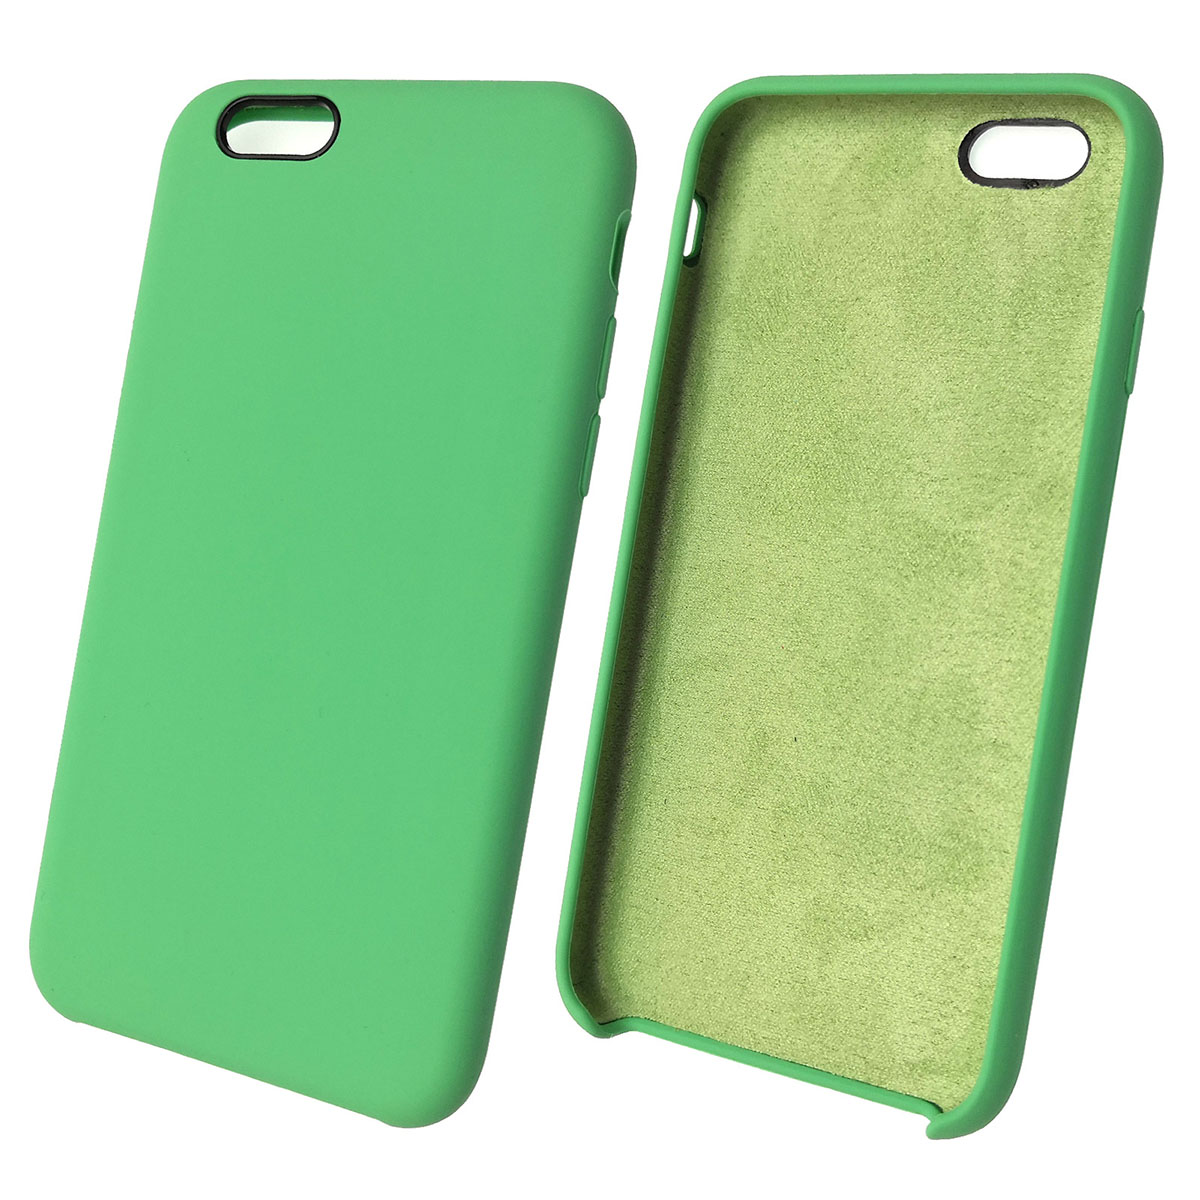 Чехол накладка Silicon Case для APPLE iPhone 6, 6G, 6S, силикон, бархат, цвет мятный.